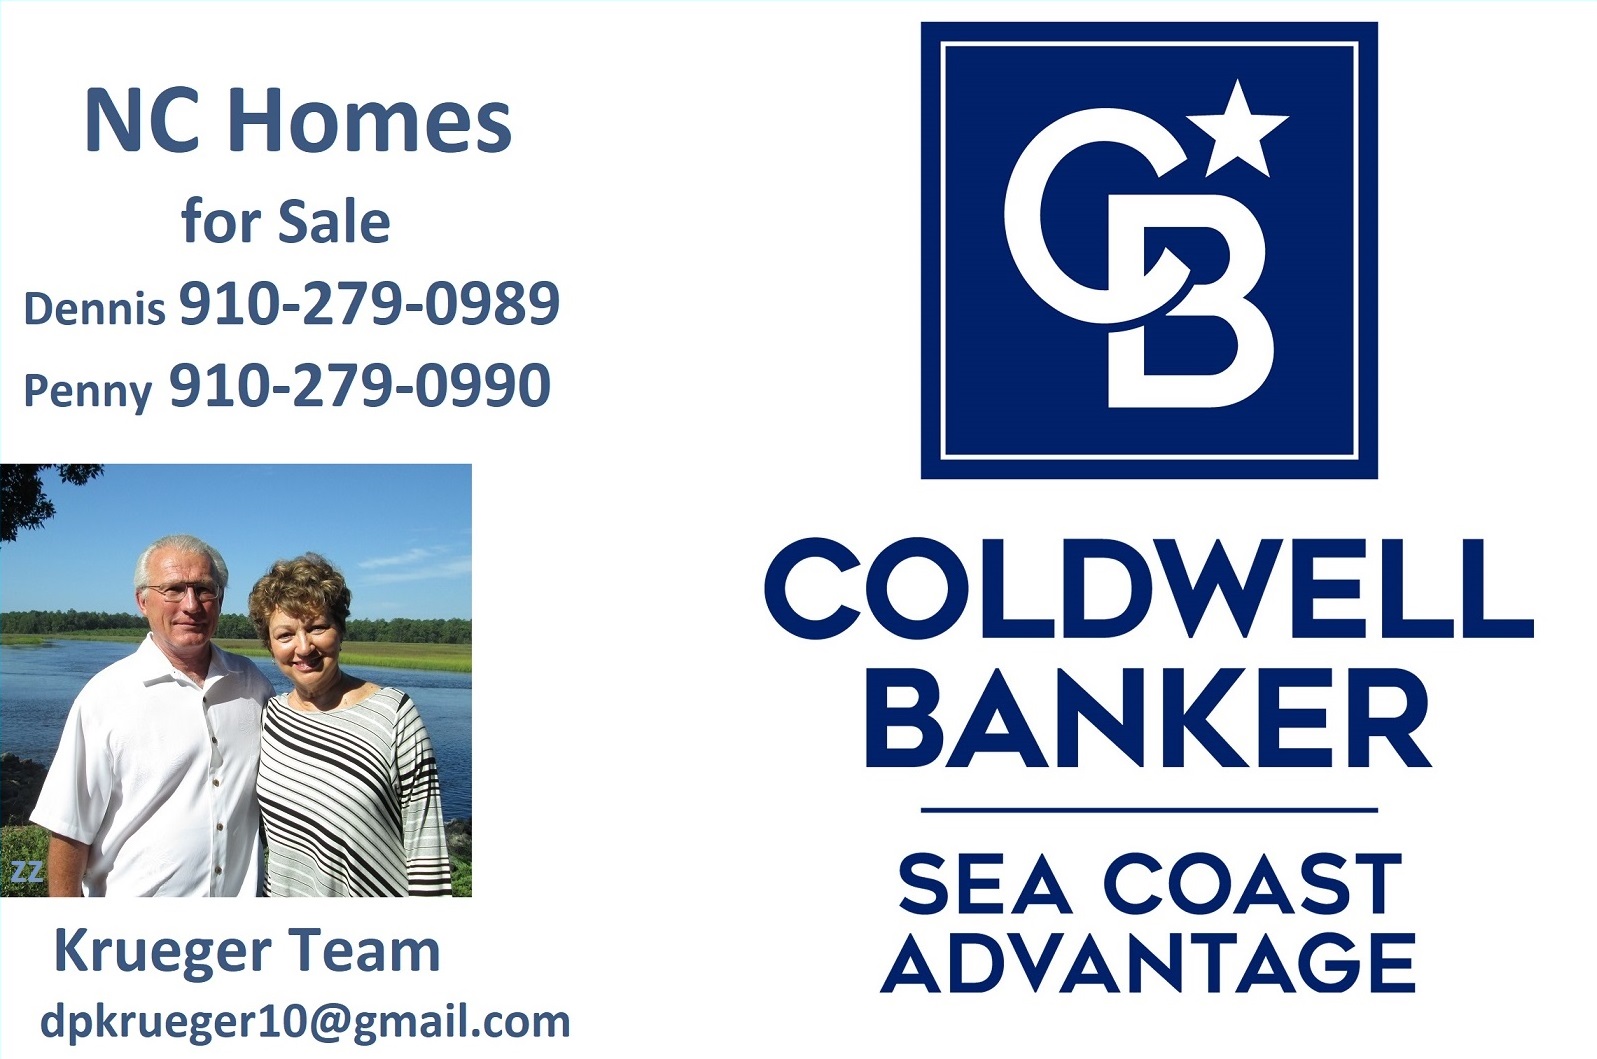 Coldwell Banker Sea Coast Advantage NC Homes Krueger Team 